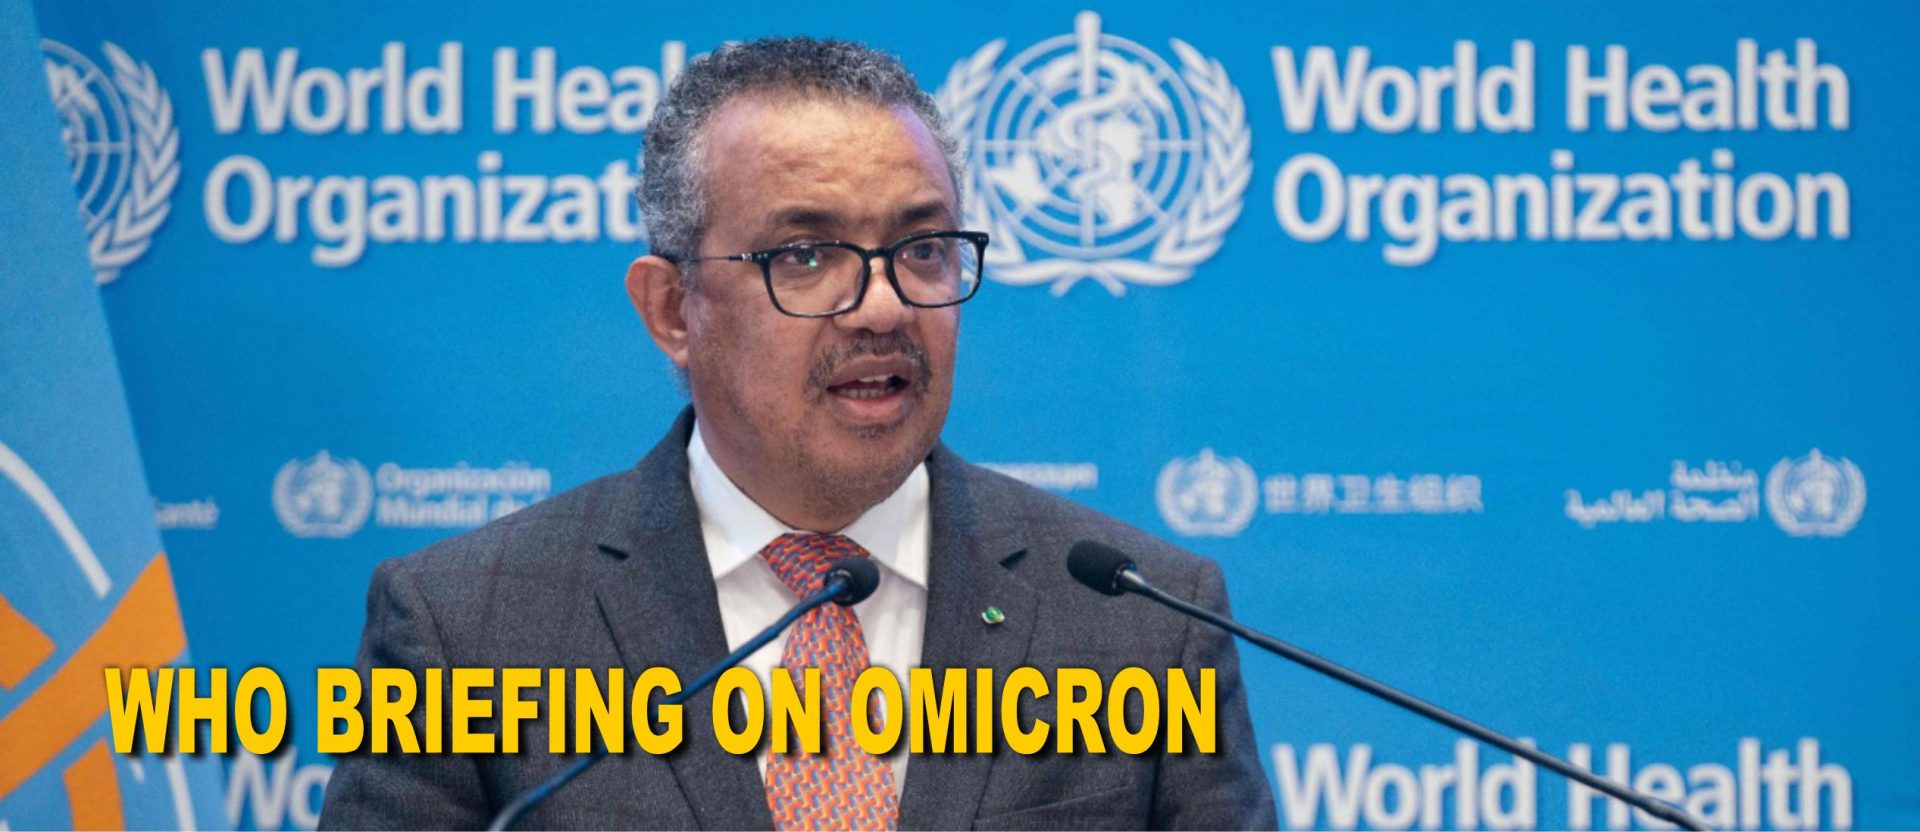 Omicron Spreading rapidly worldwide